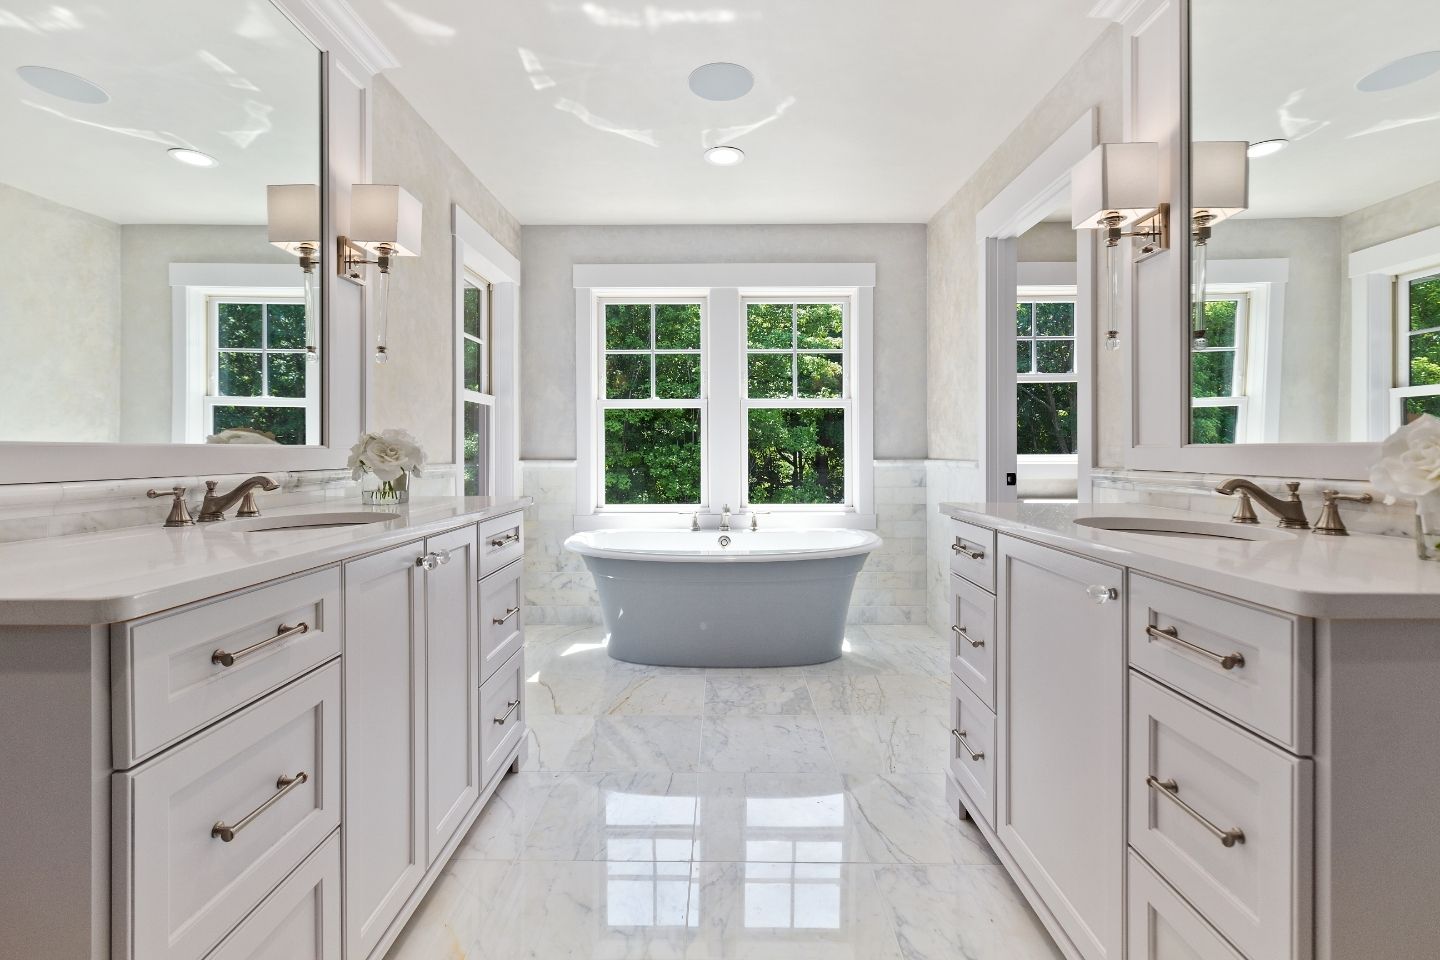 Elegant bathroom with marble floor, freestanding tub, dual vanities, and ample natural light.